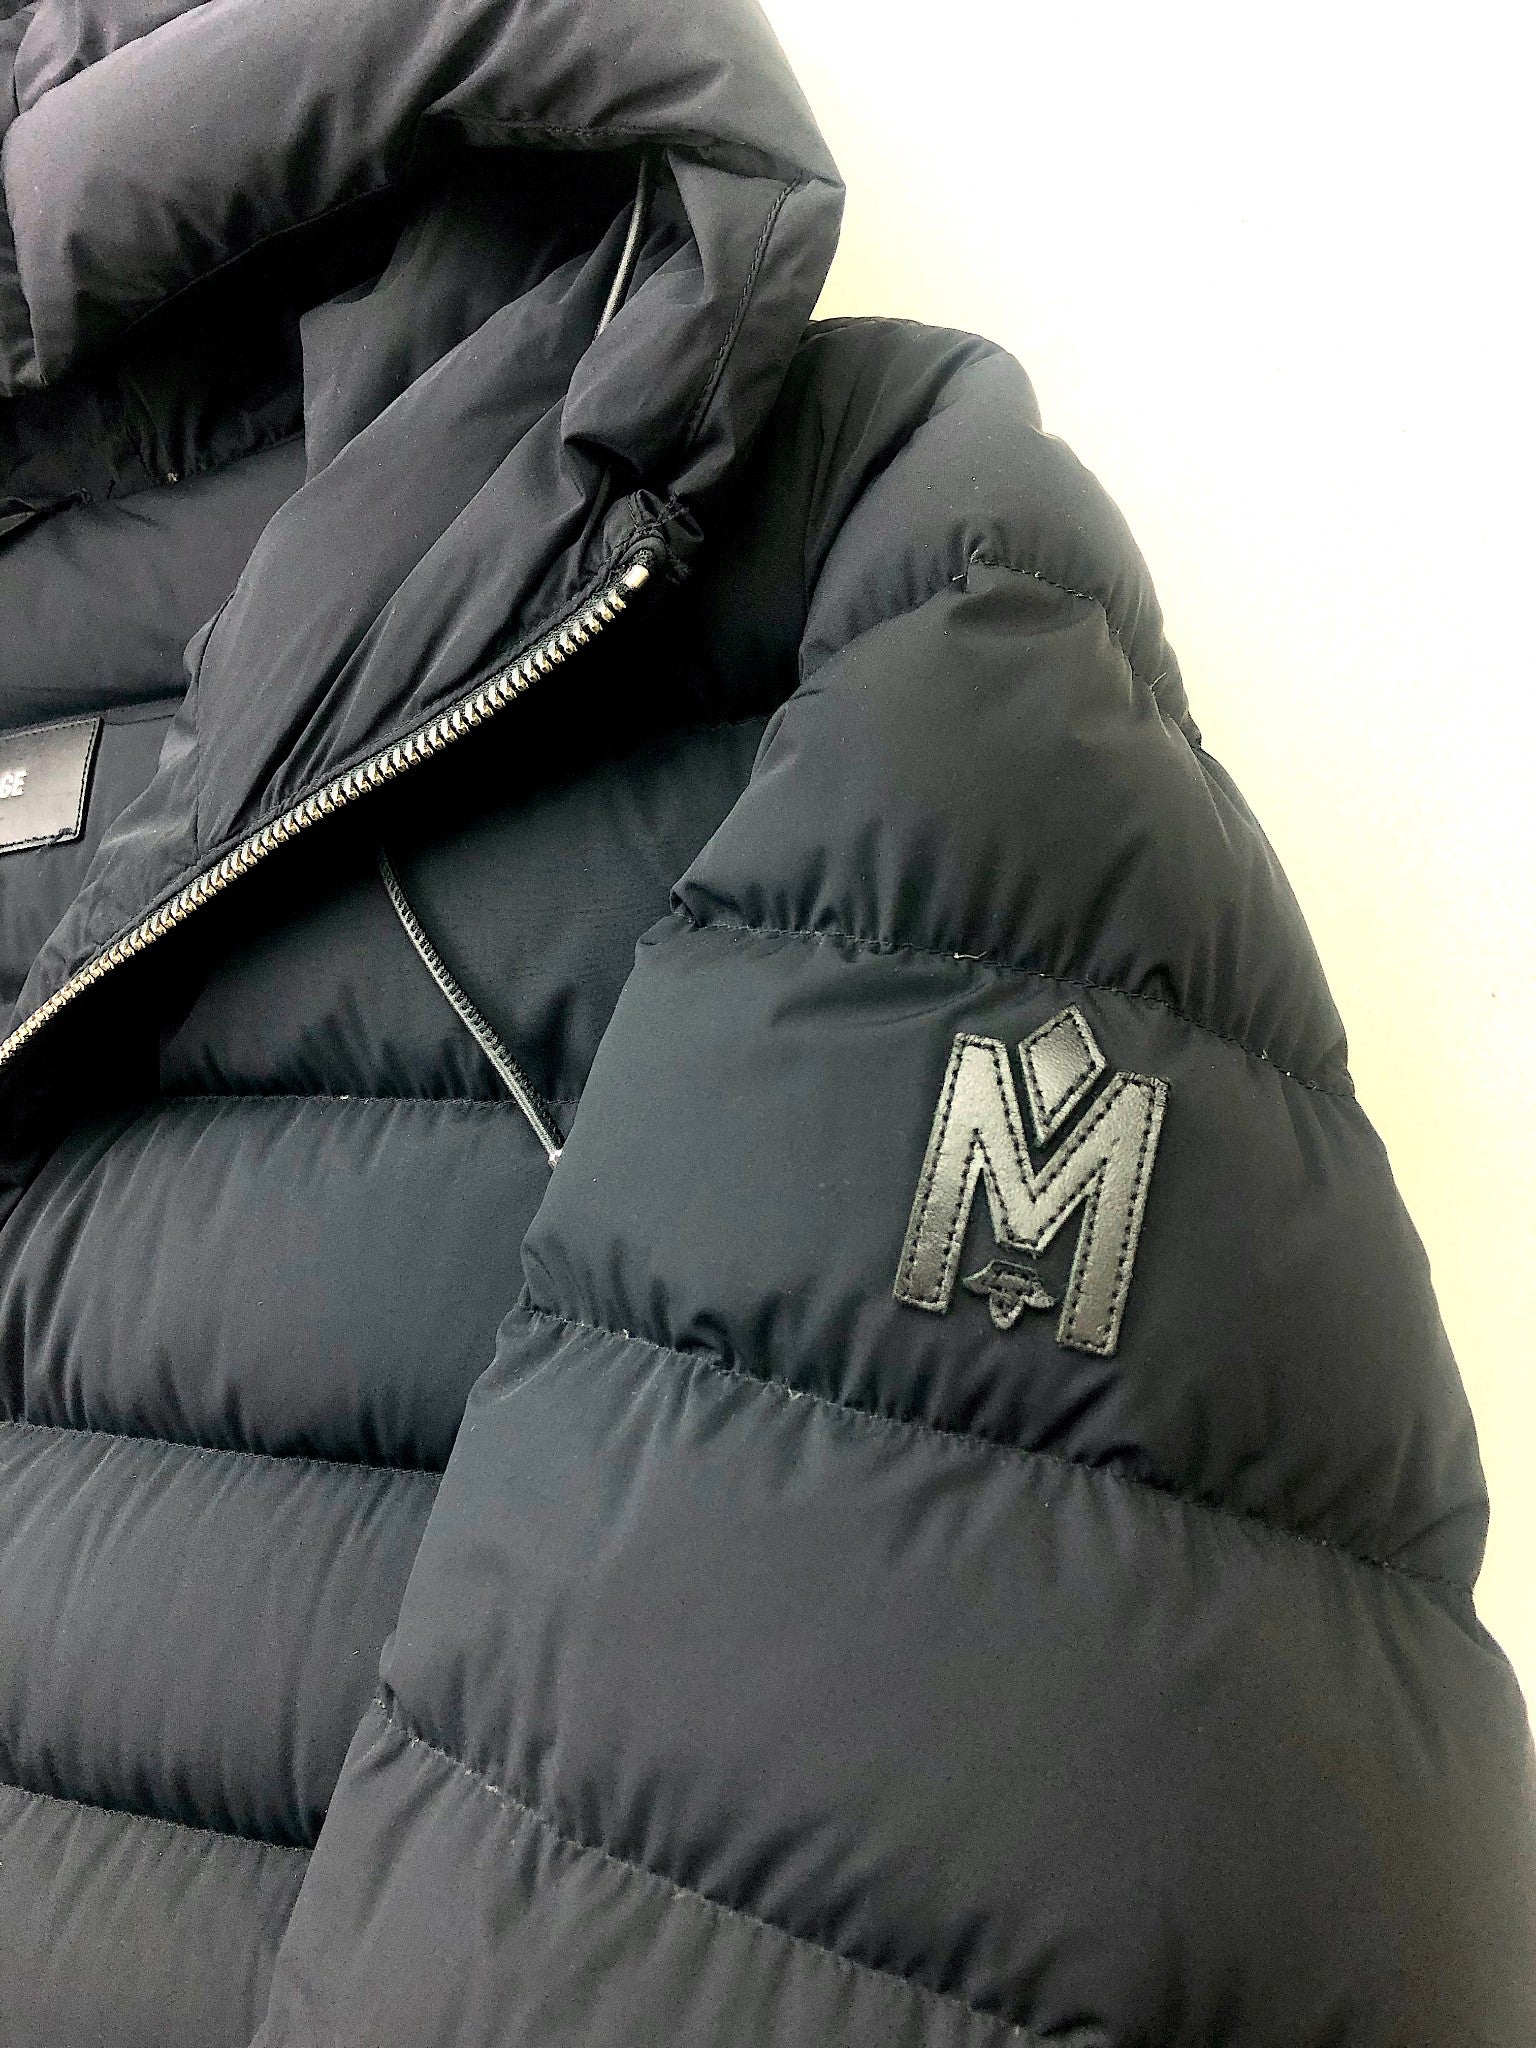 Mackage Jack Agile-360 Stretch Light Hooded Down Jacket Size 42 Black